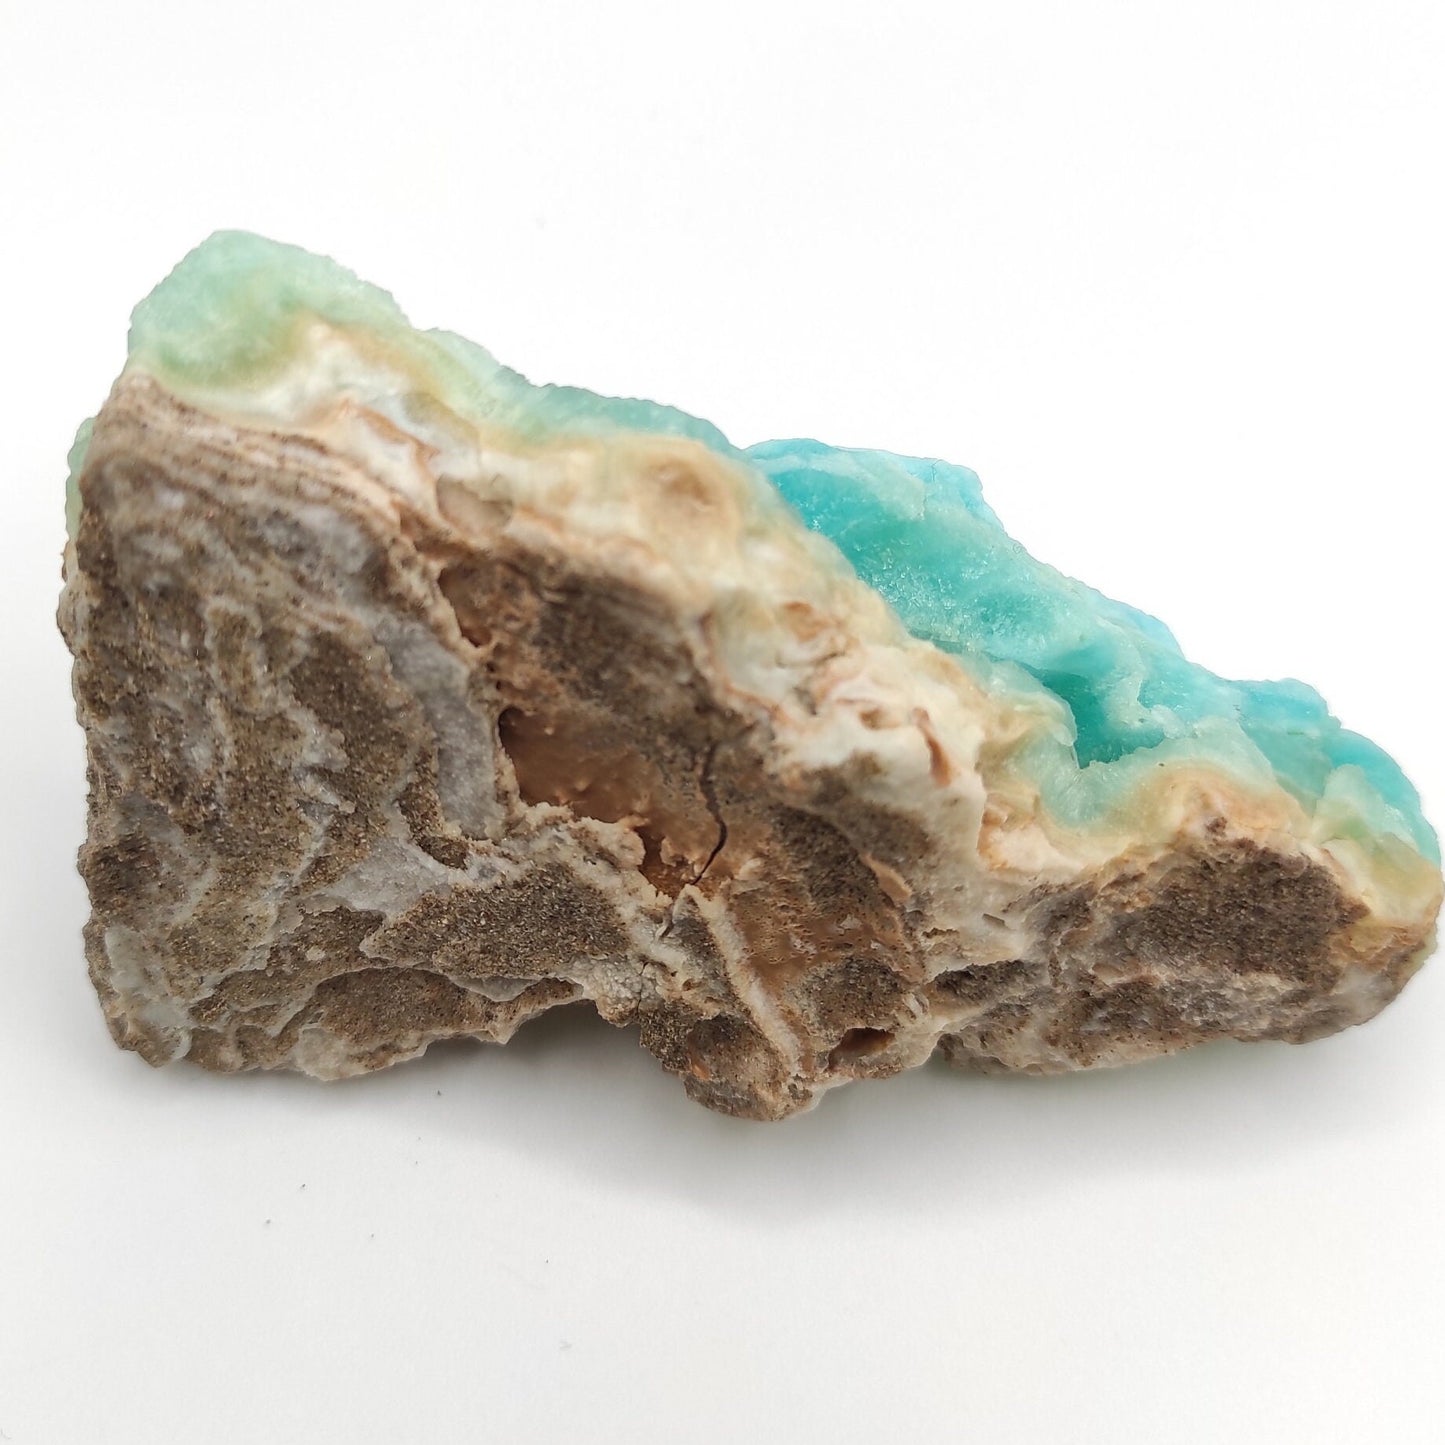 328g Smithsonite Mineral Specimen - Blue Smithsonite Crystal - Natural Crystal Specimens - Zinc Spar - Raw Smithsonite from Afghanistan